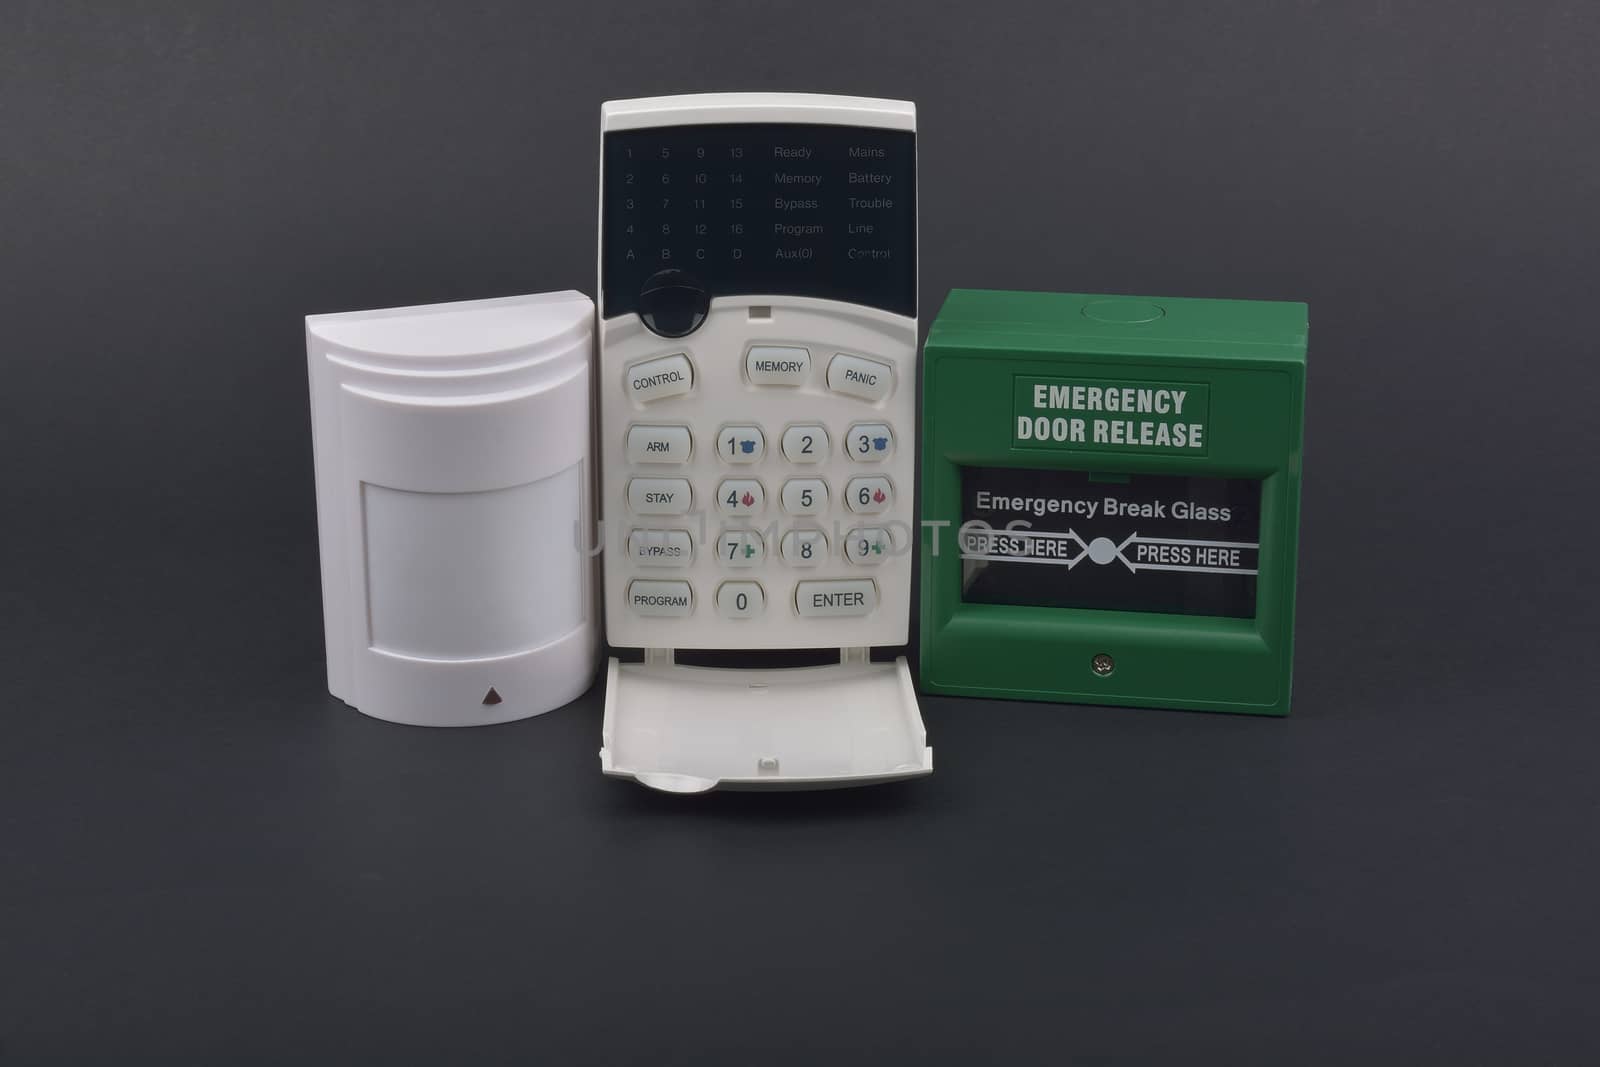 security alarm systems. Industrial or house alarm